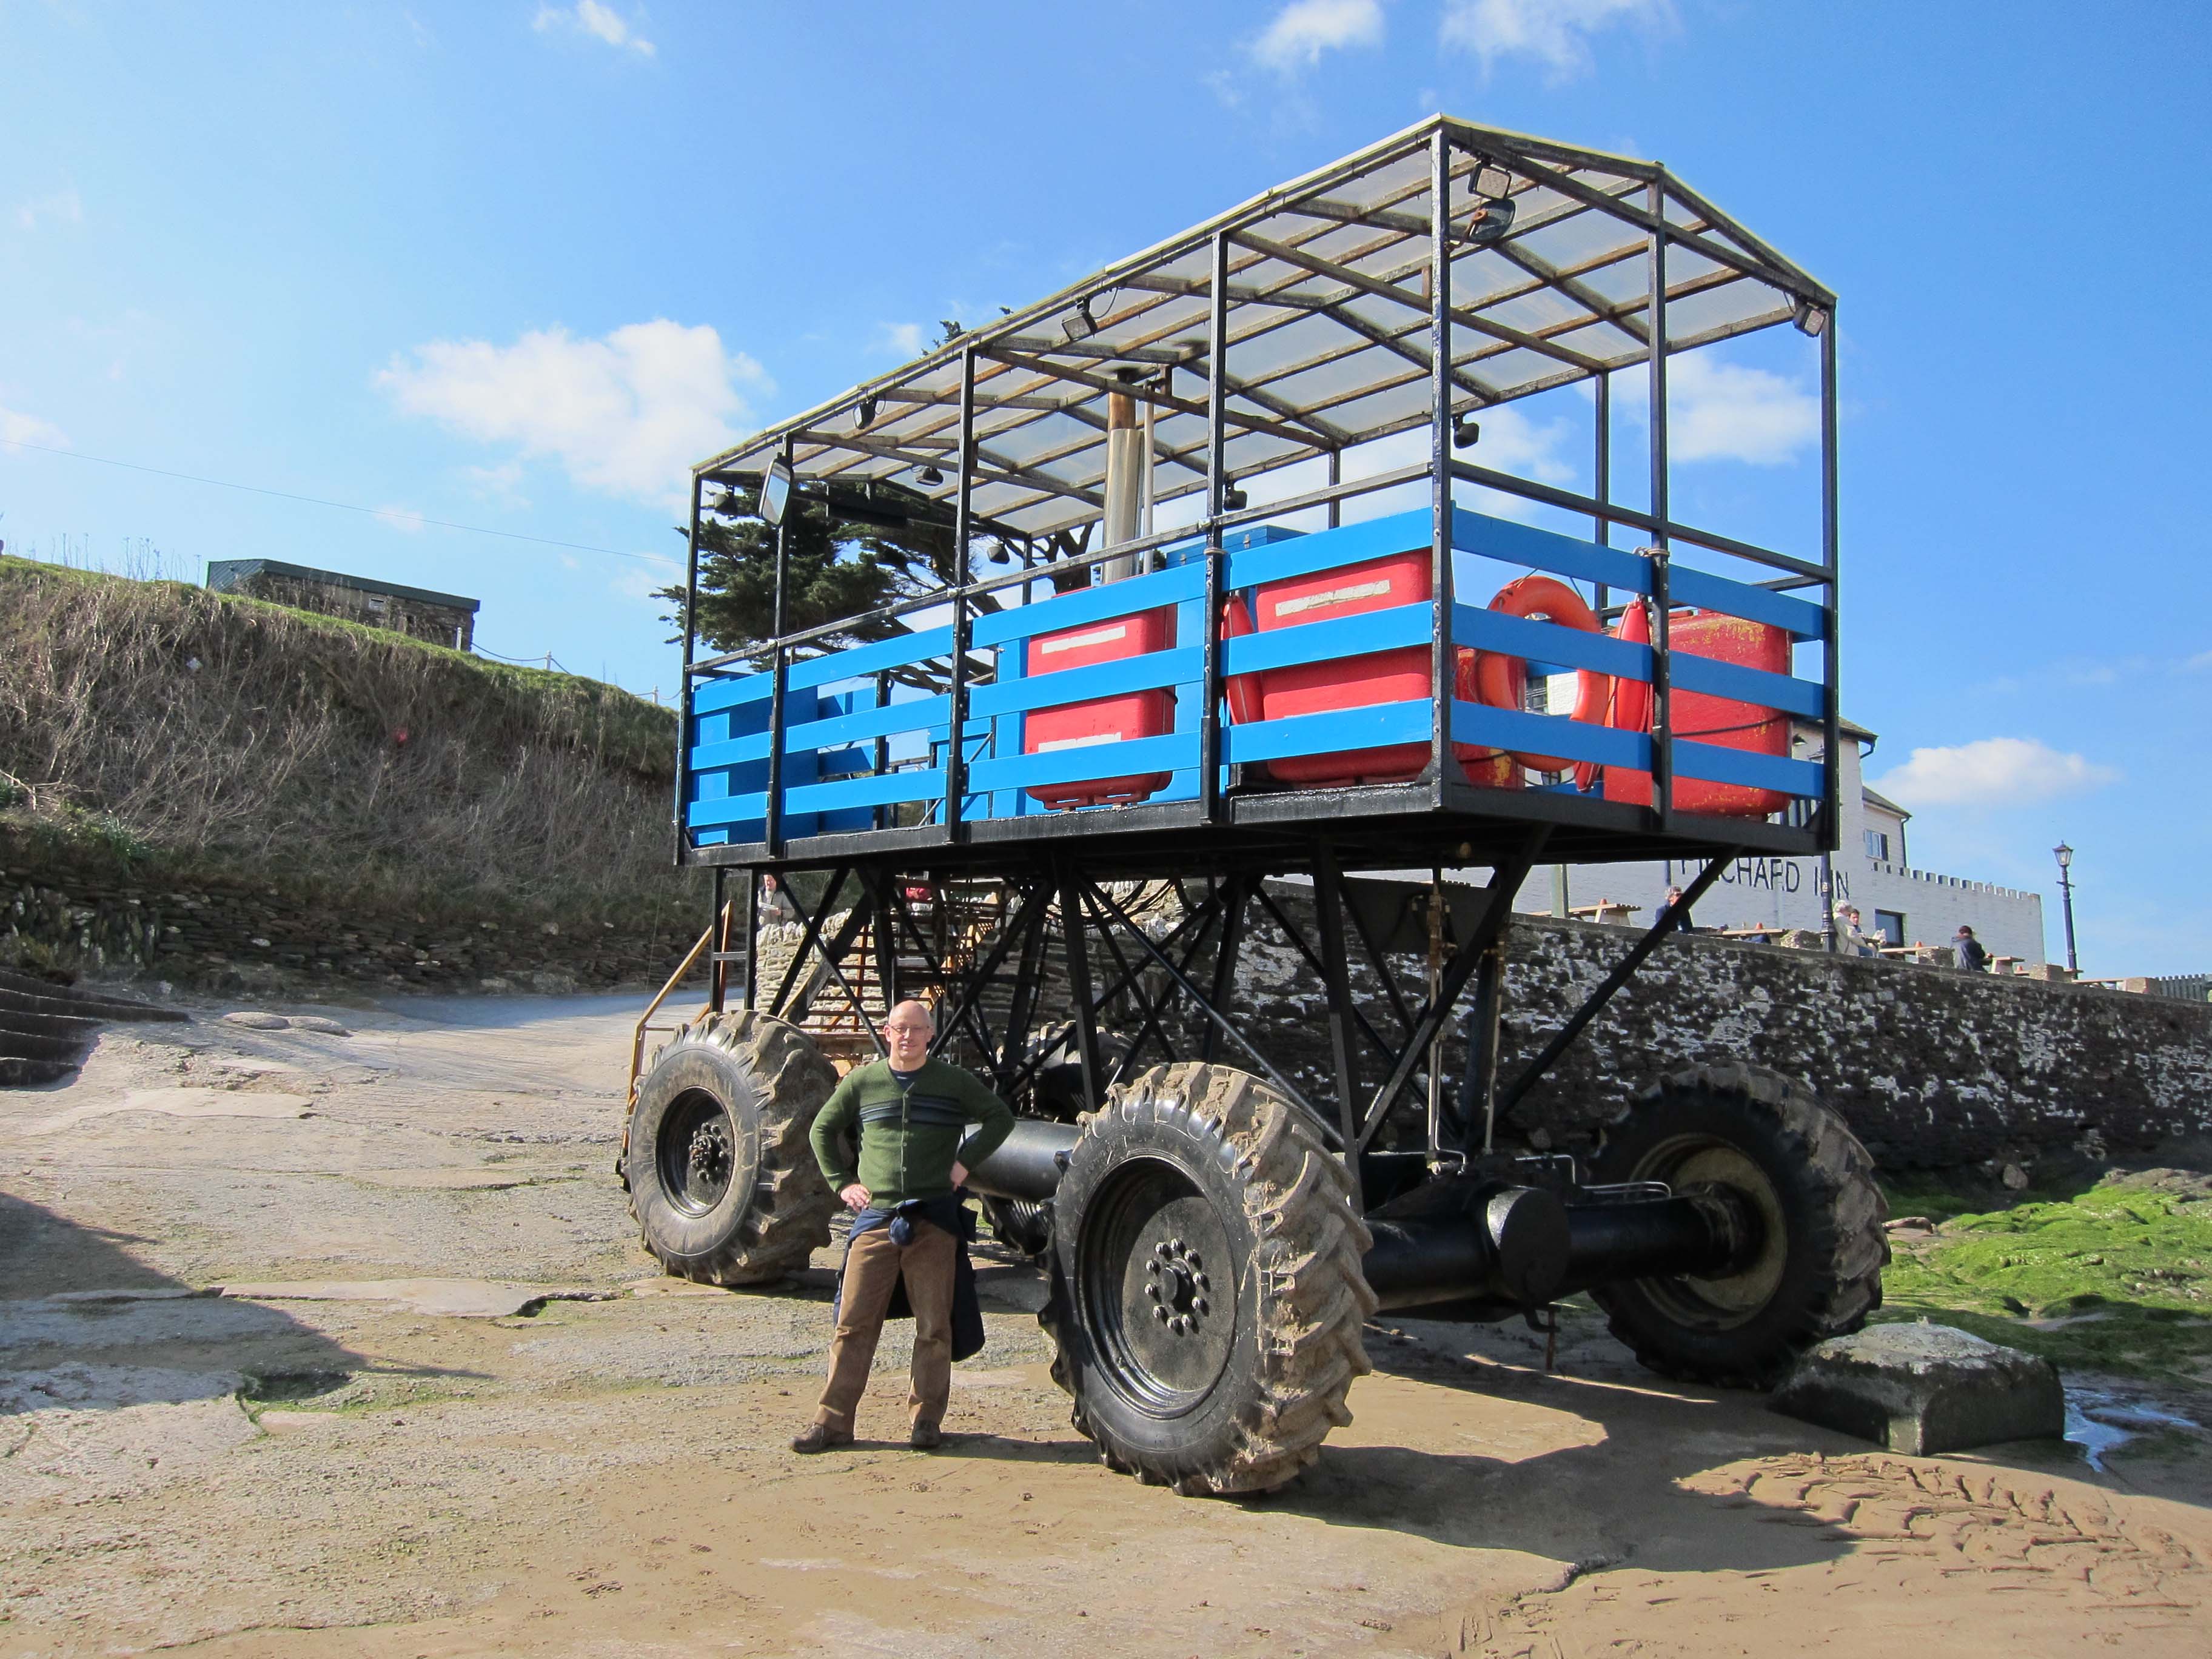 Burgh Island Sea tractor